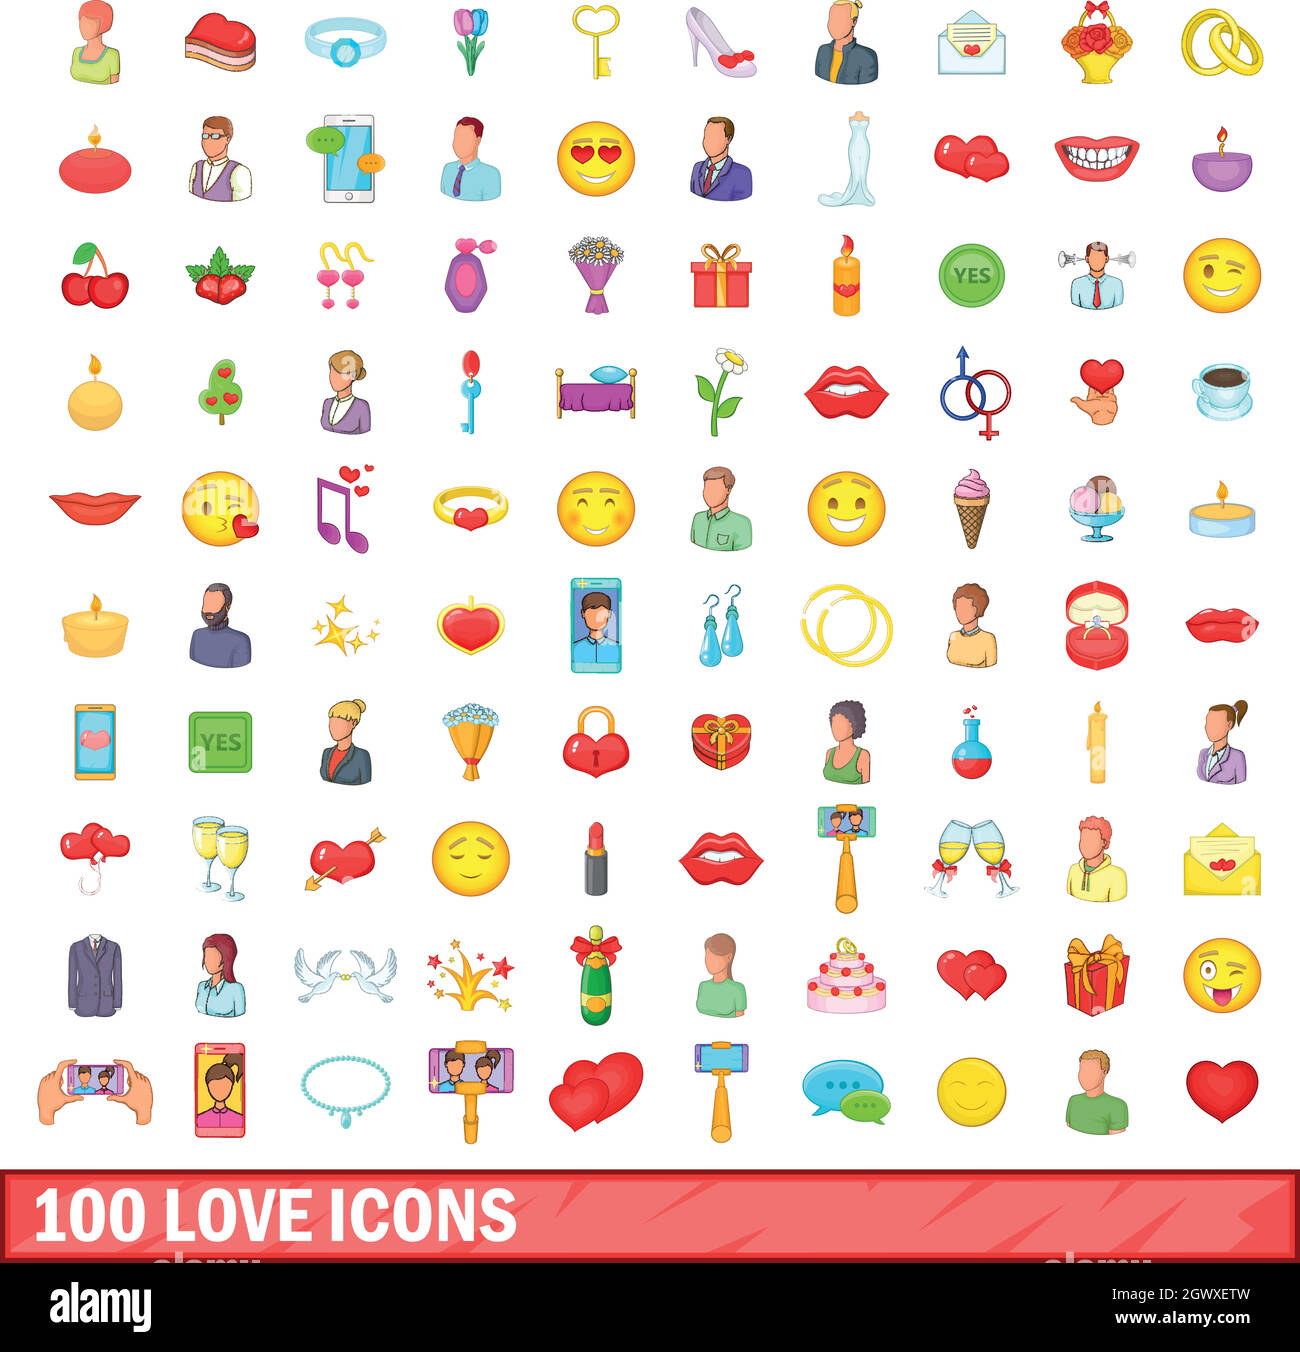 100 love icons set, cartoon style Stock Vector